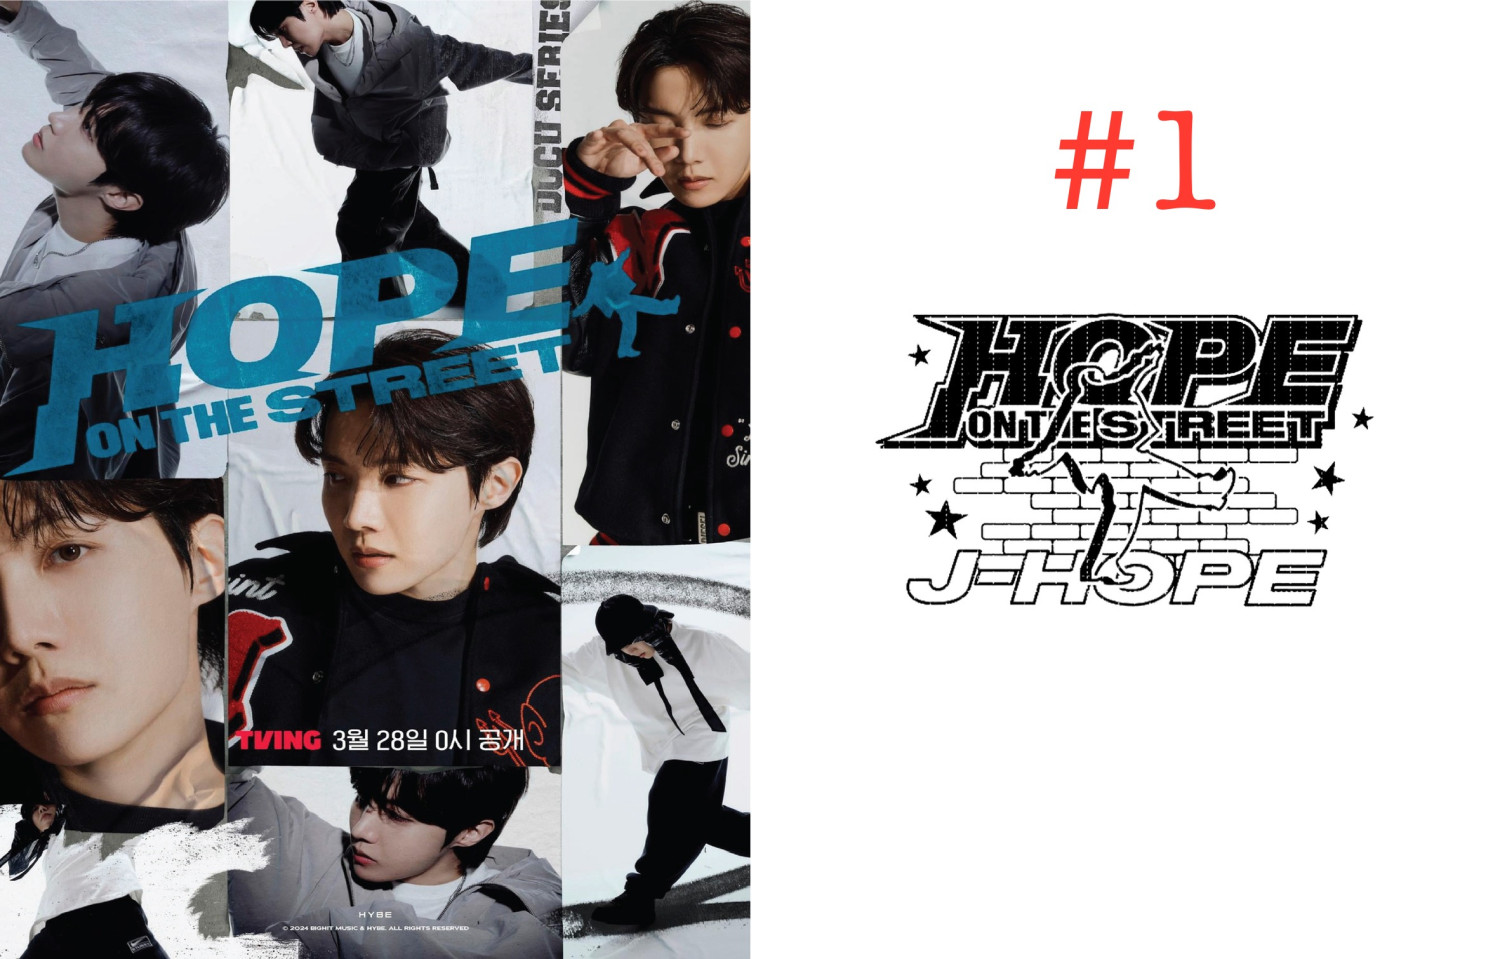 BTS J-HOPE Hope On The Street Concept Mini Concert Poster